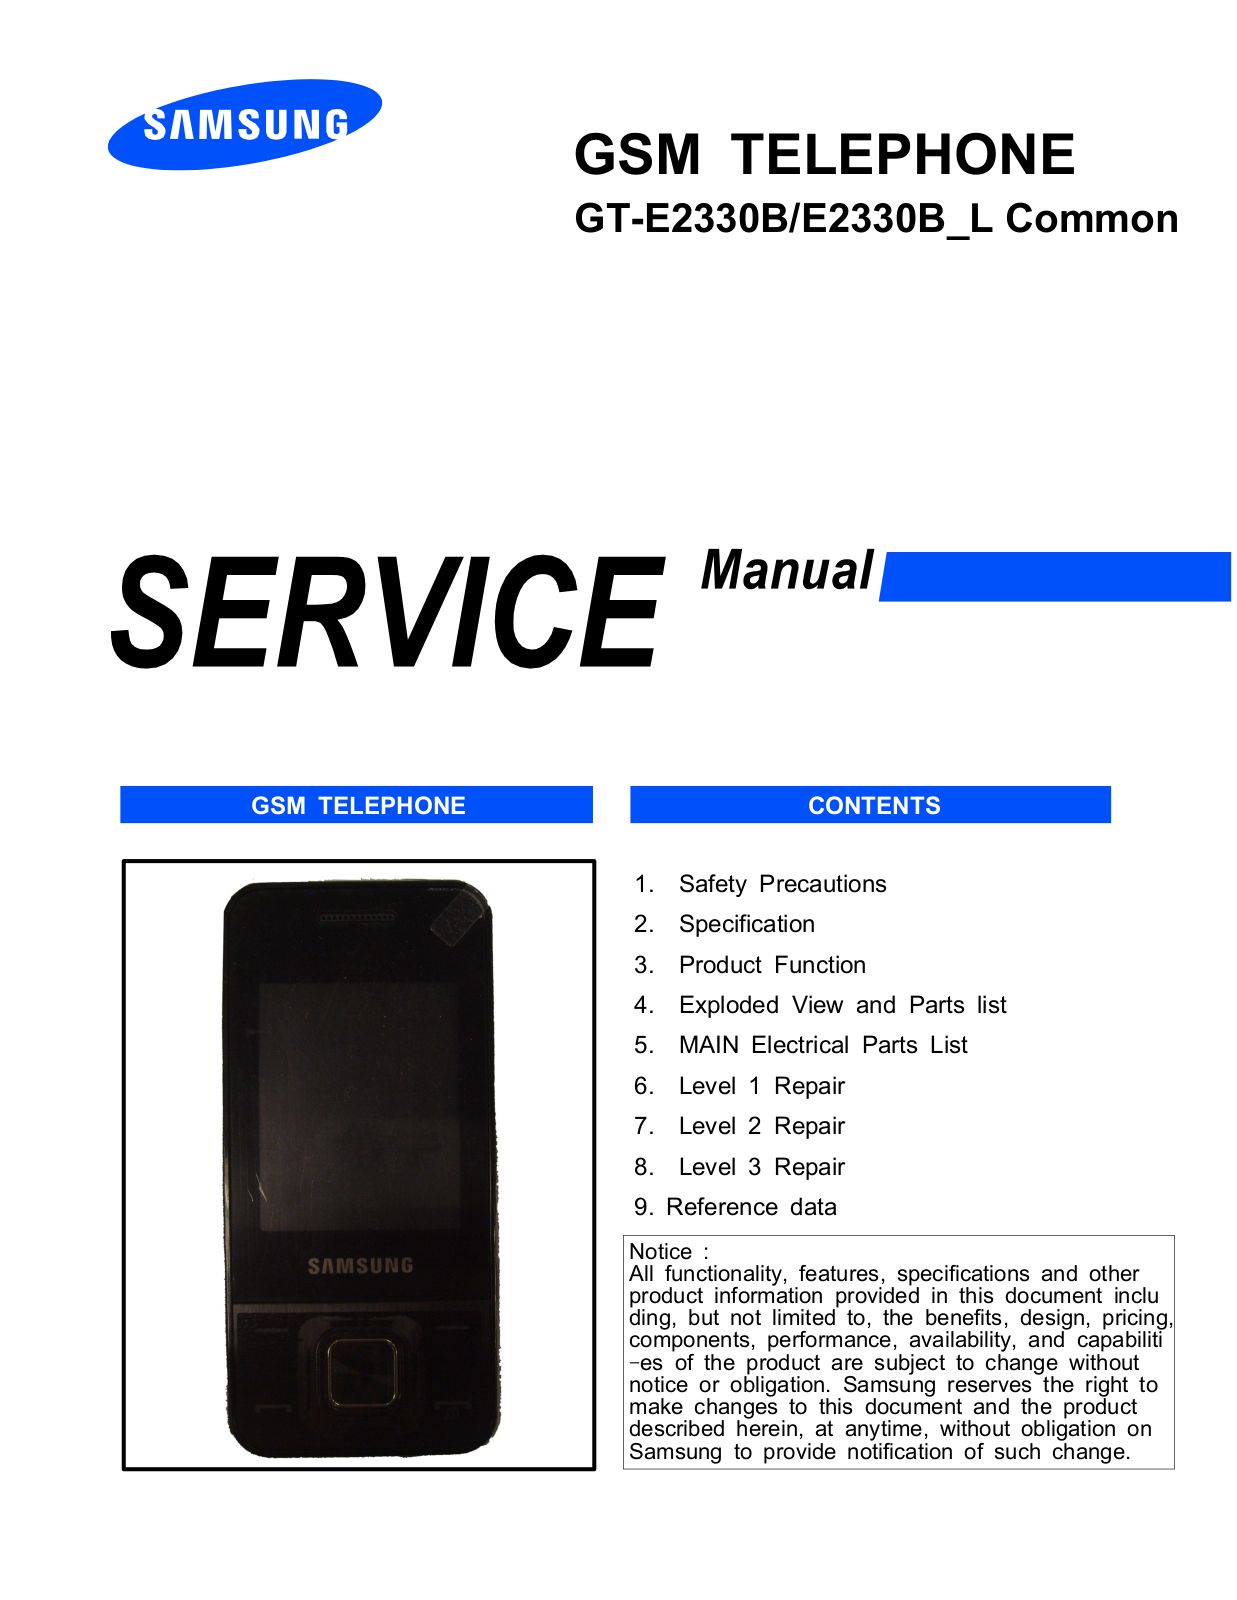 Samsung E2330B Service Manual